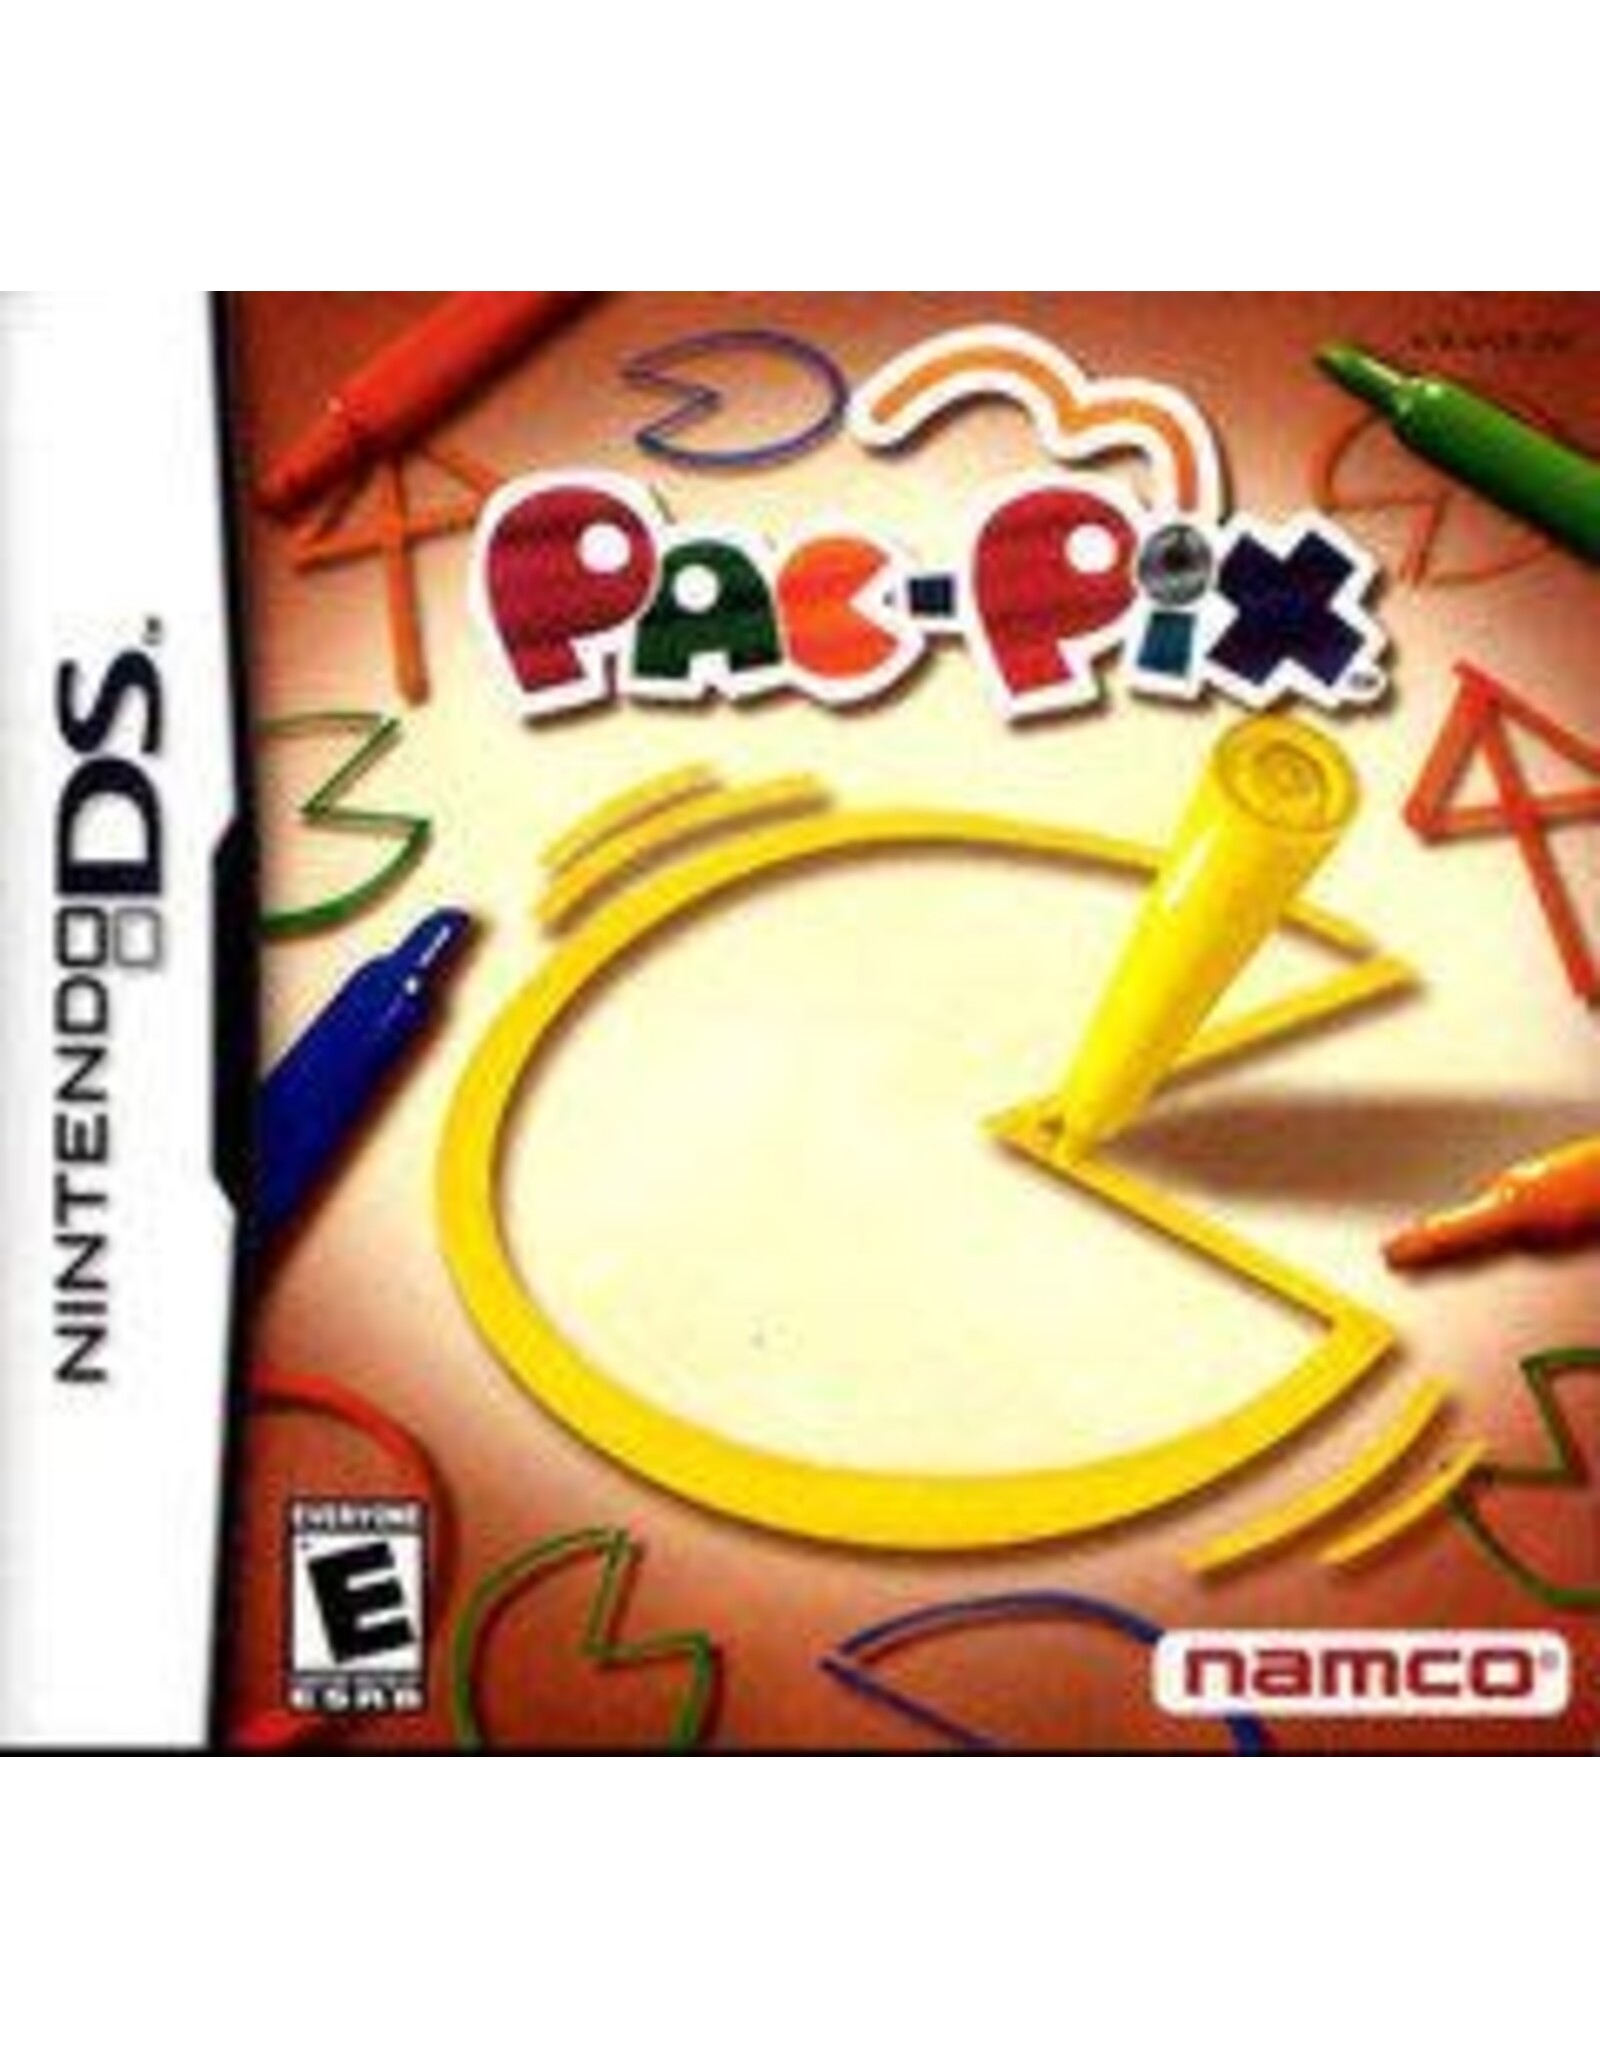 Nintendo DS Pac Pix (No Manual)